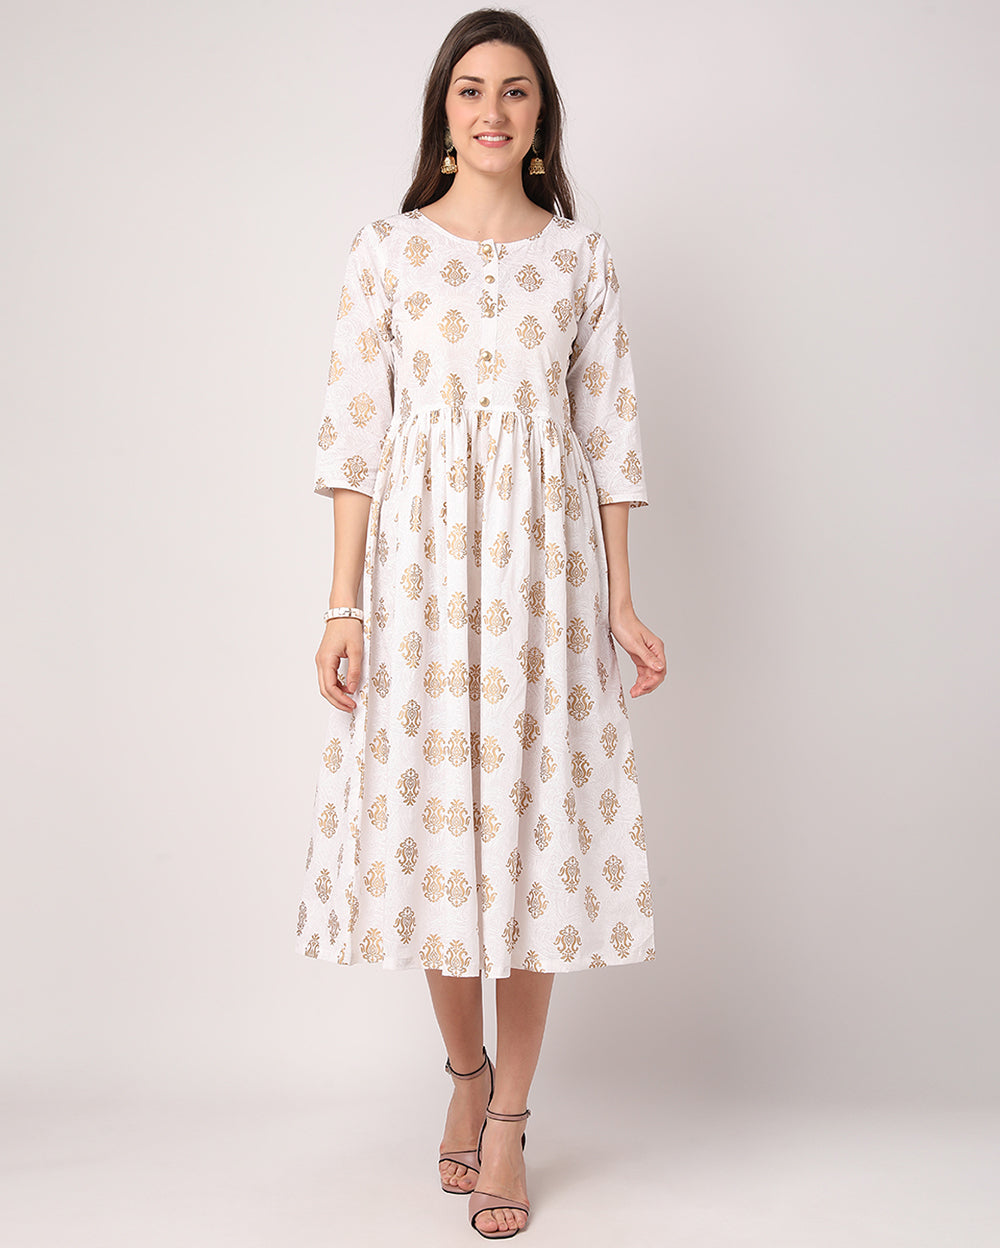 White & Golden Paisley Hand block printed Cotton Dress